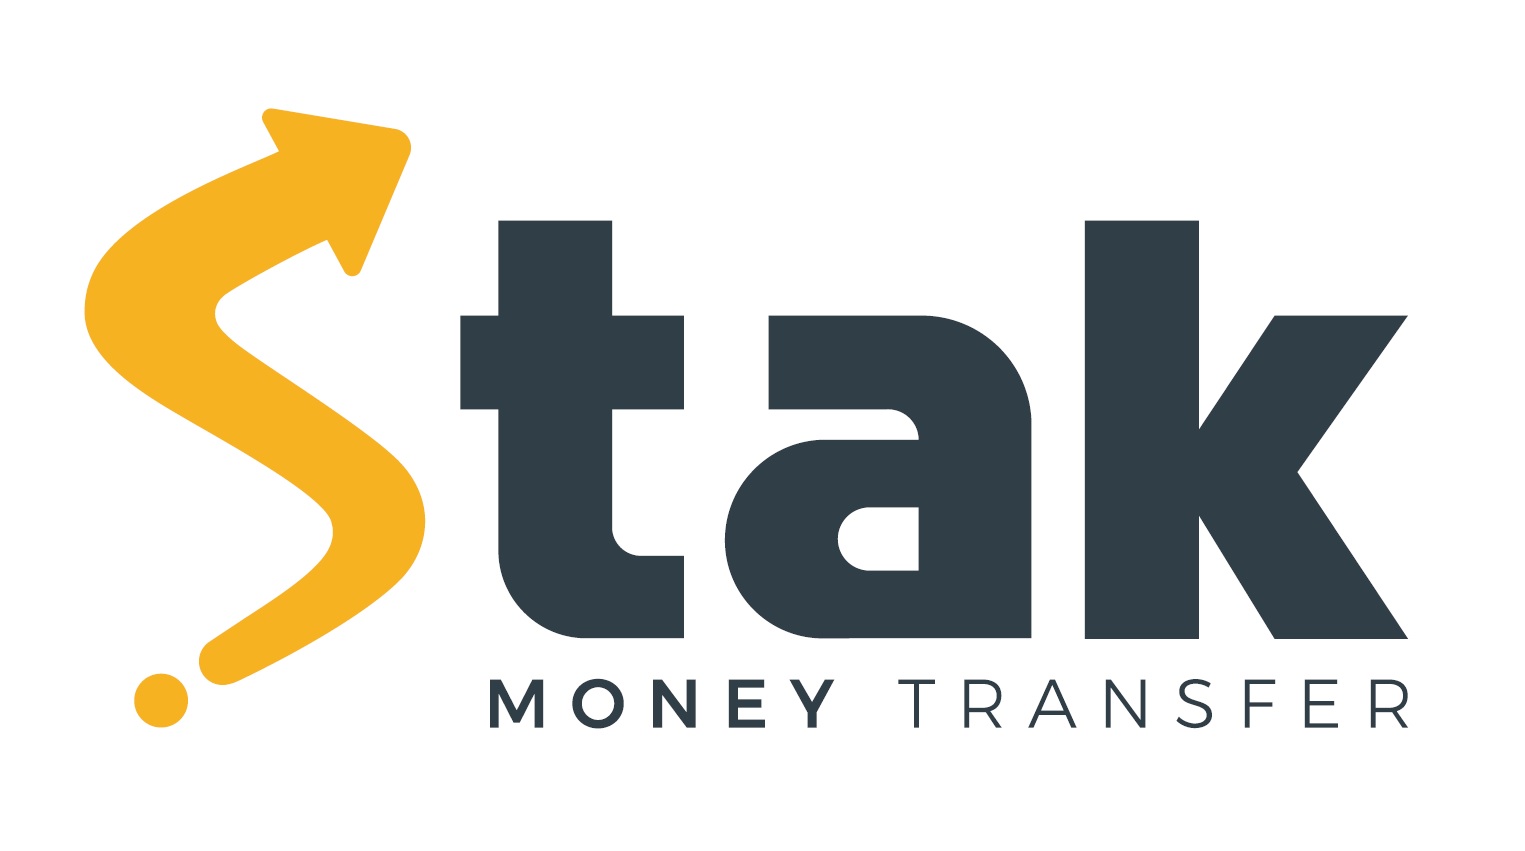 Stak Money Transfer ЗАО